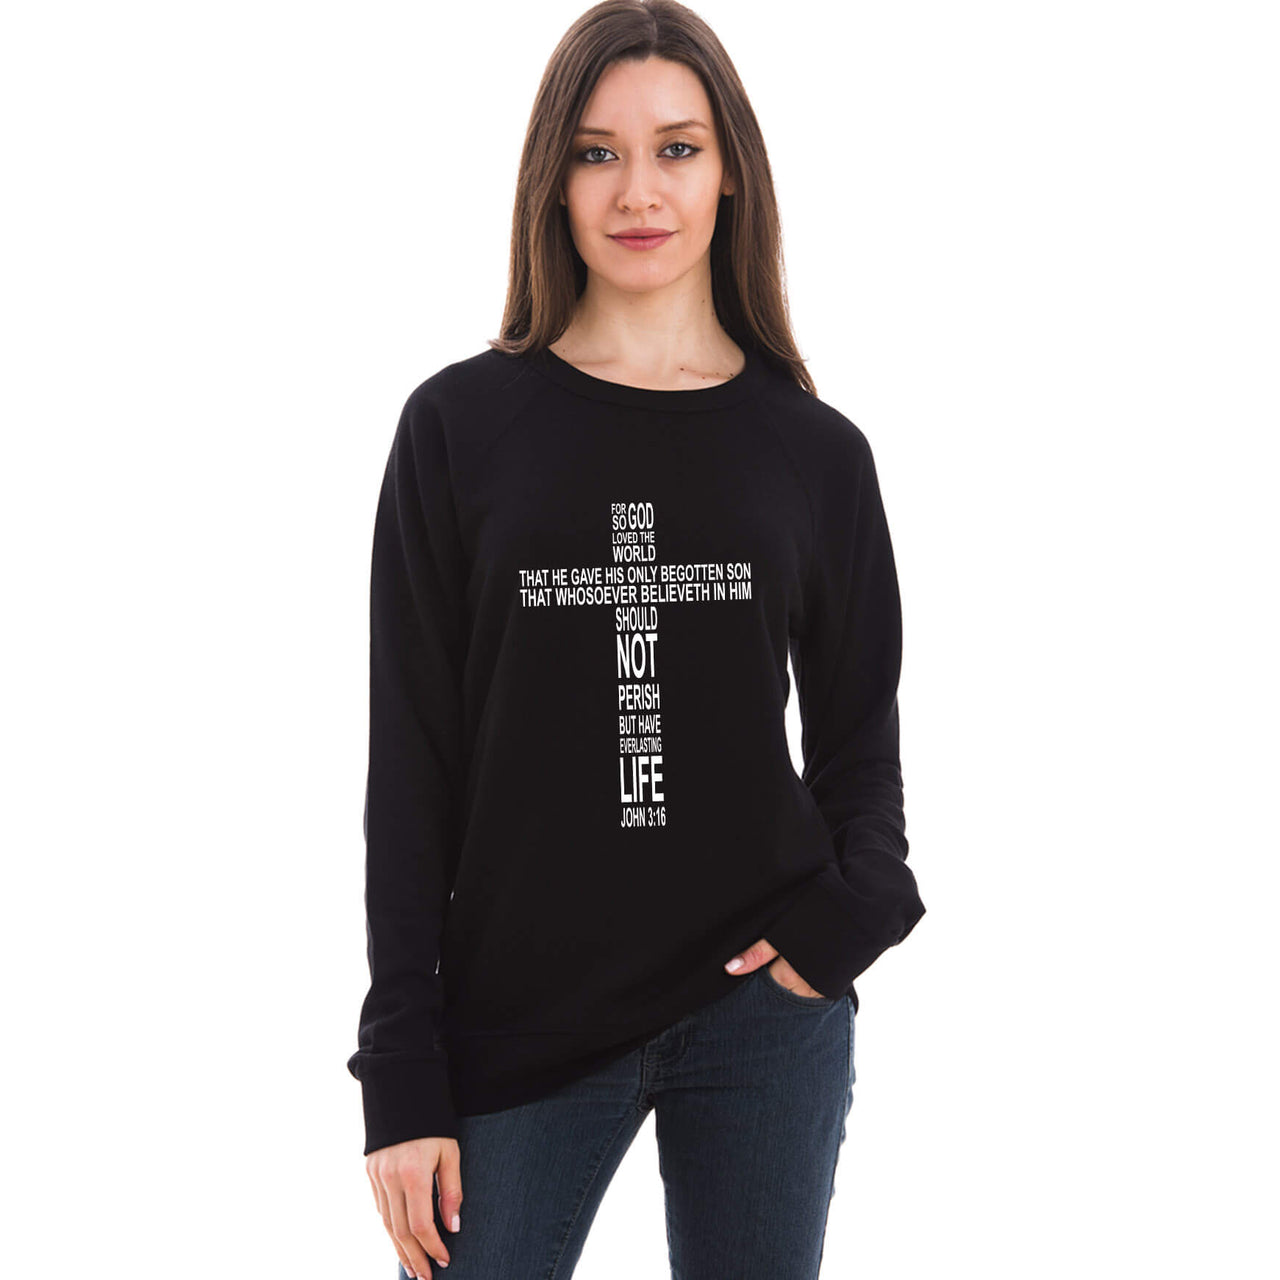 John 3:16 Cross Unisex Crewneck Sweatshirt FINAL SALE ITEM